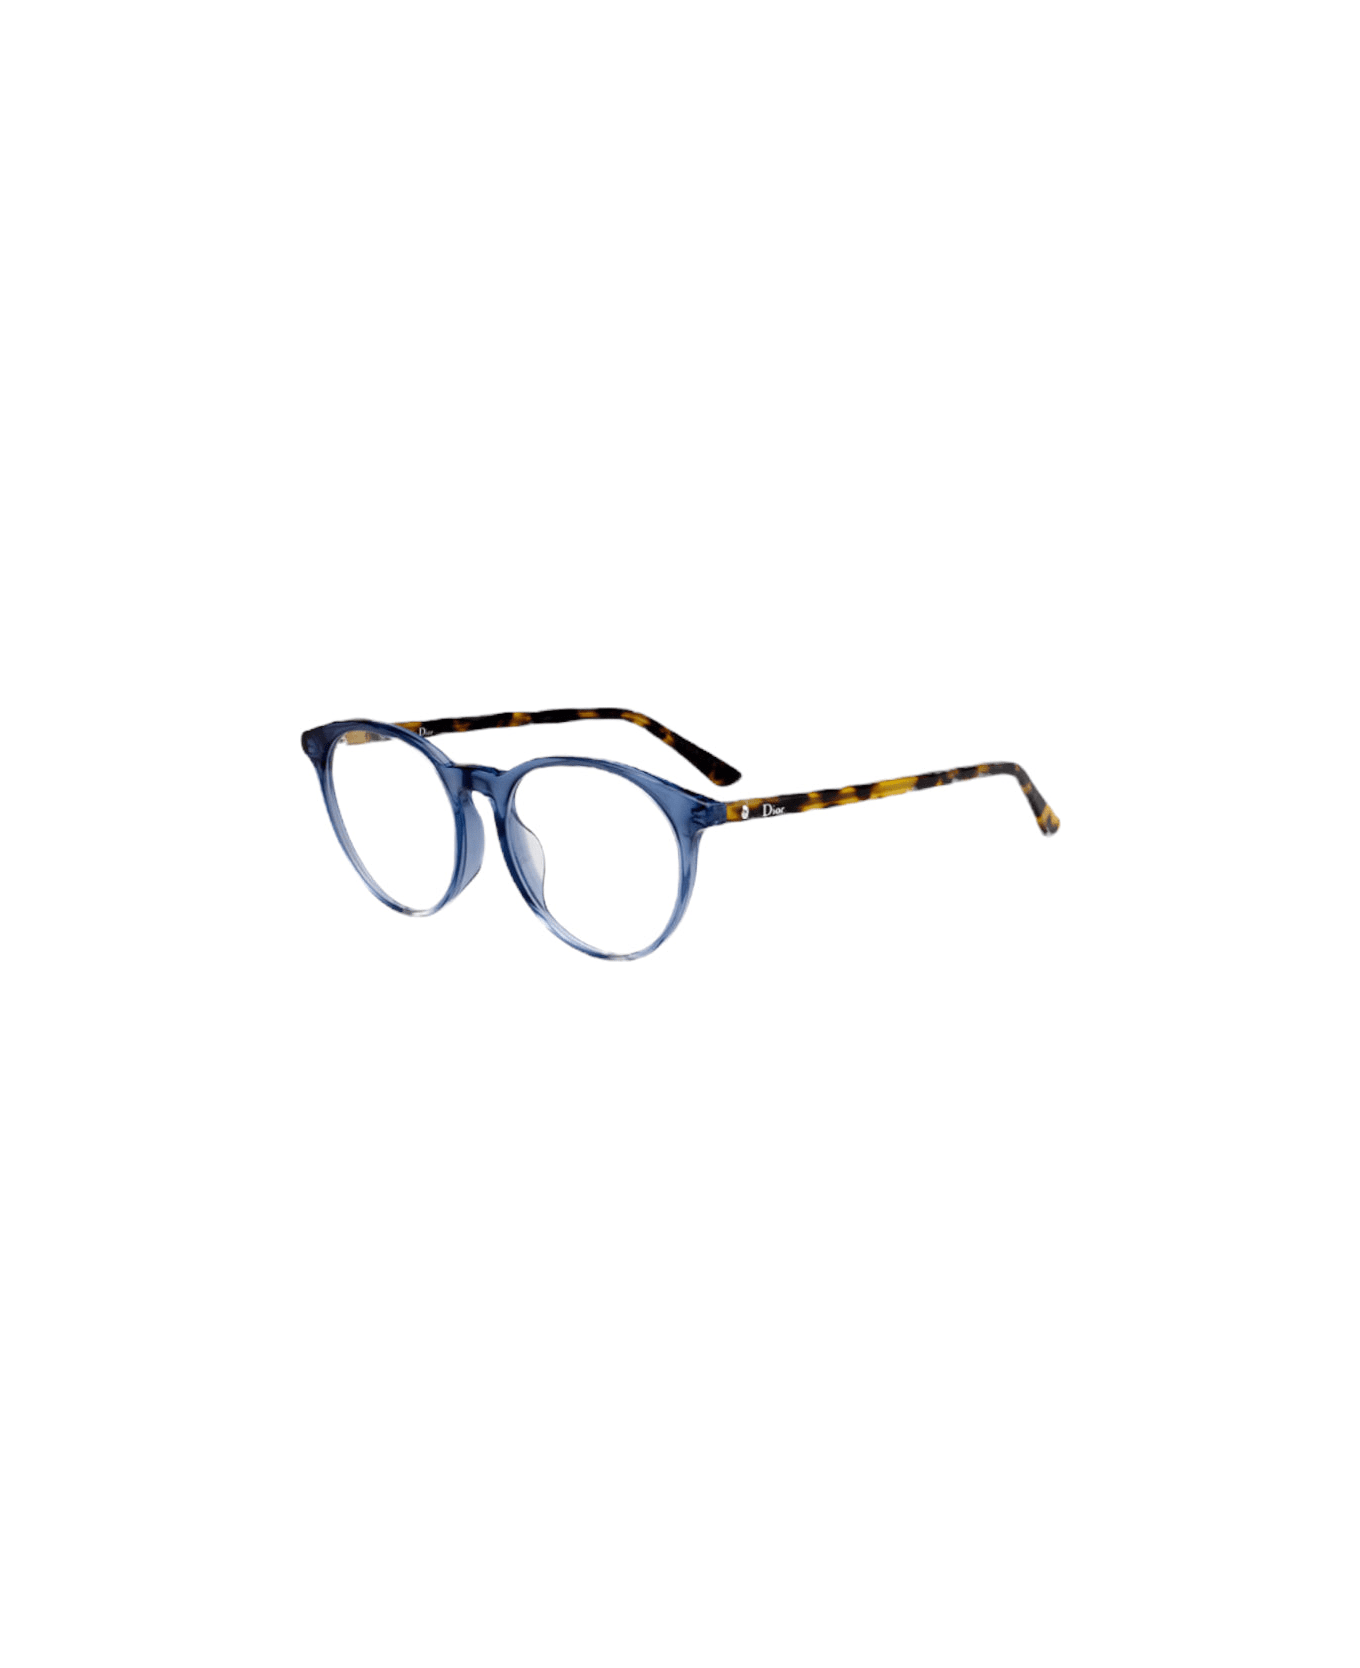 Dior Eyewear Montaigne - Blue & Havana Glasses アイウェア